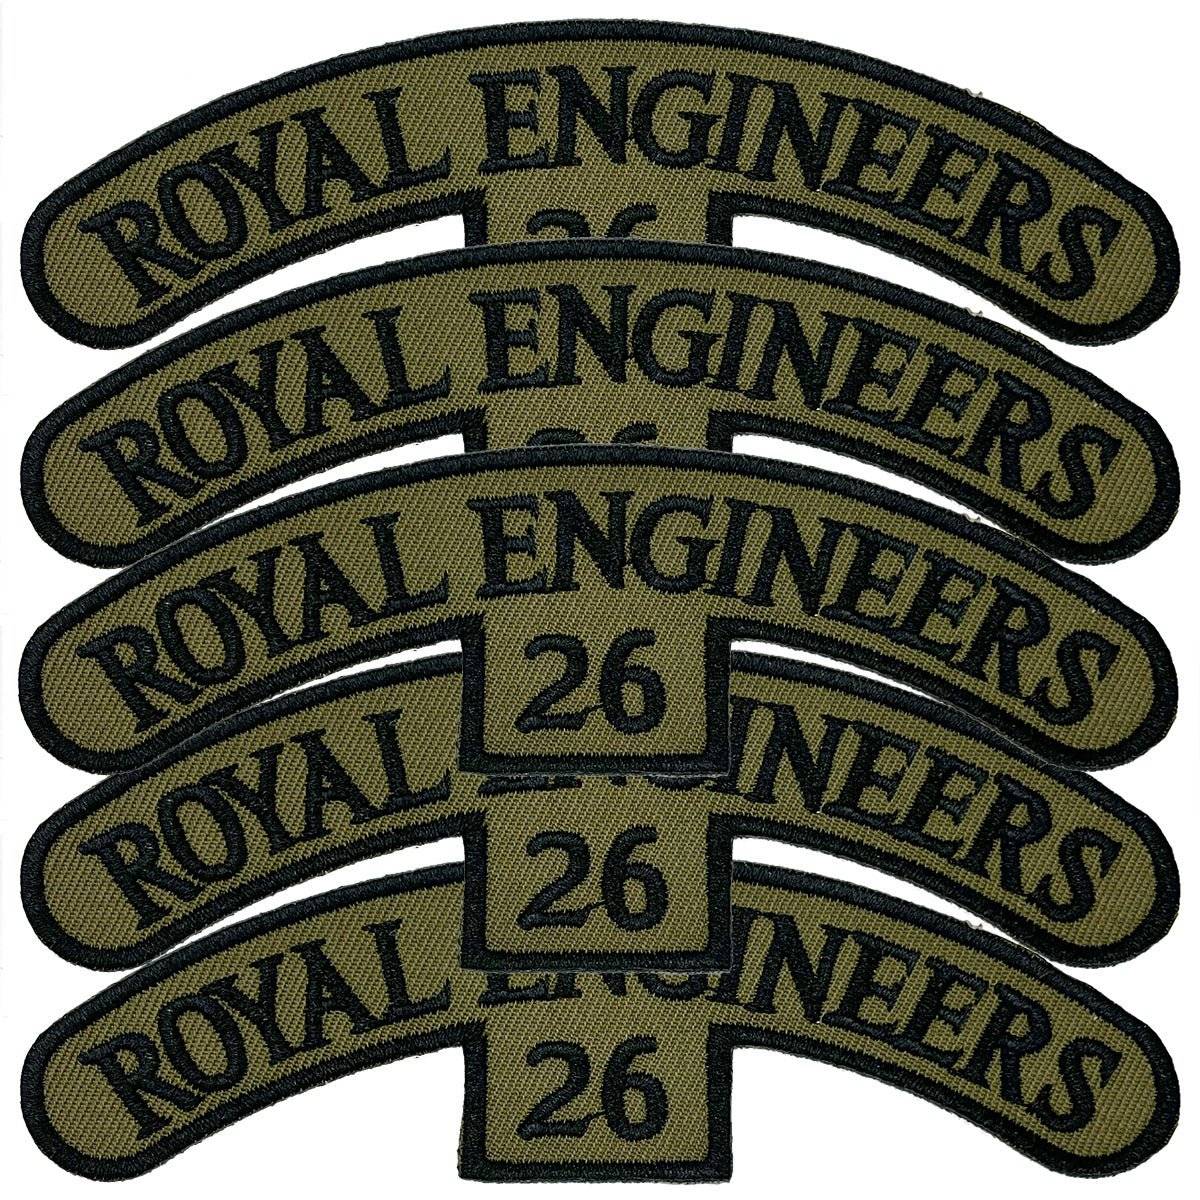 26 Engineer Regiment Iron On Shoulder TRF Patch - John Bull Clothing